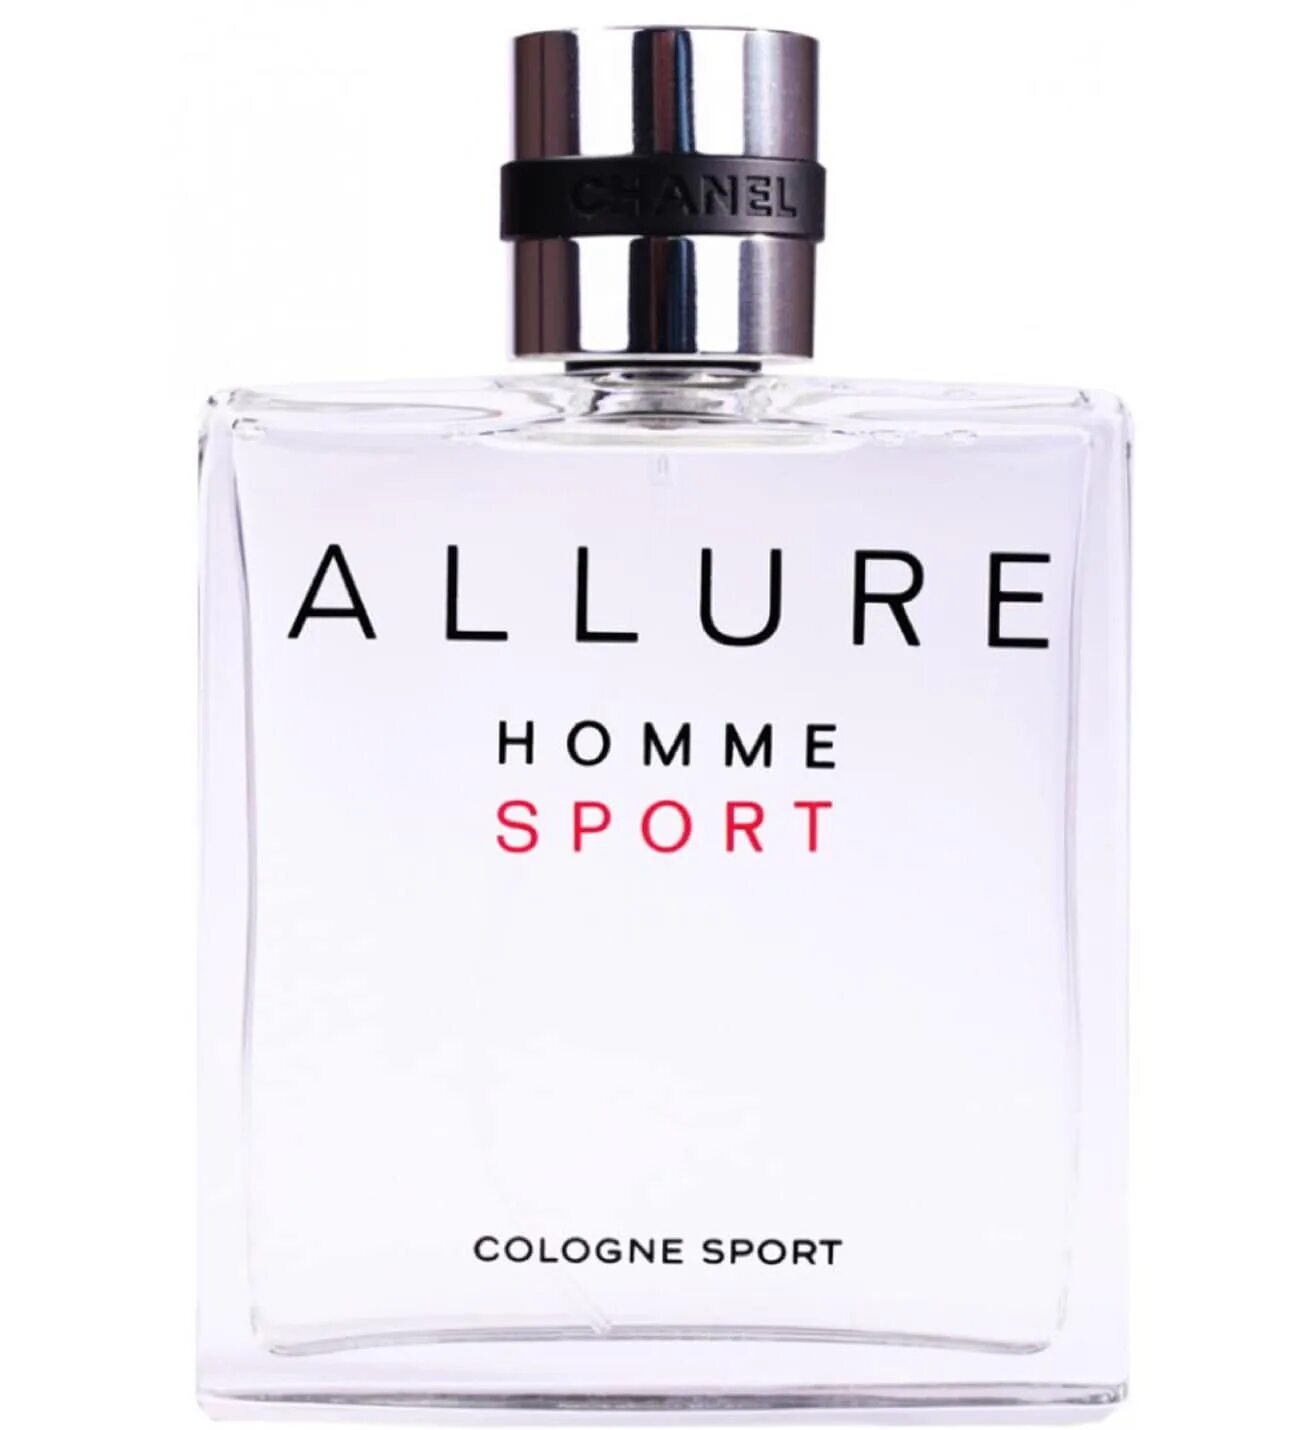 Chanel homme sport cologne. Chanel Allure homme Sport Cologne. Chanel Allure homme Sport. Шанель хом спорт мужские.